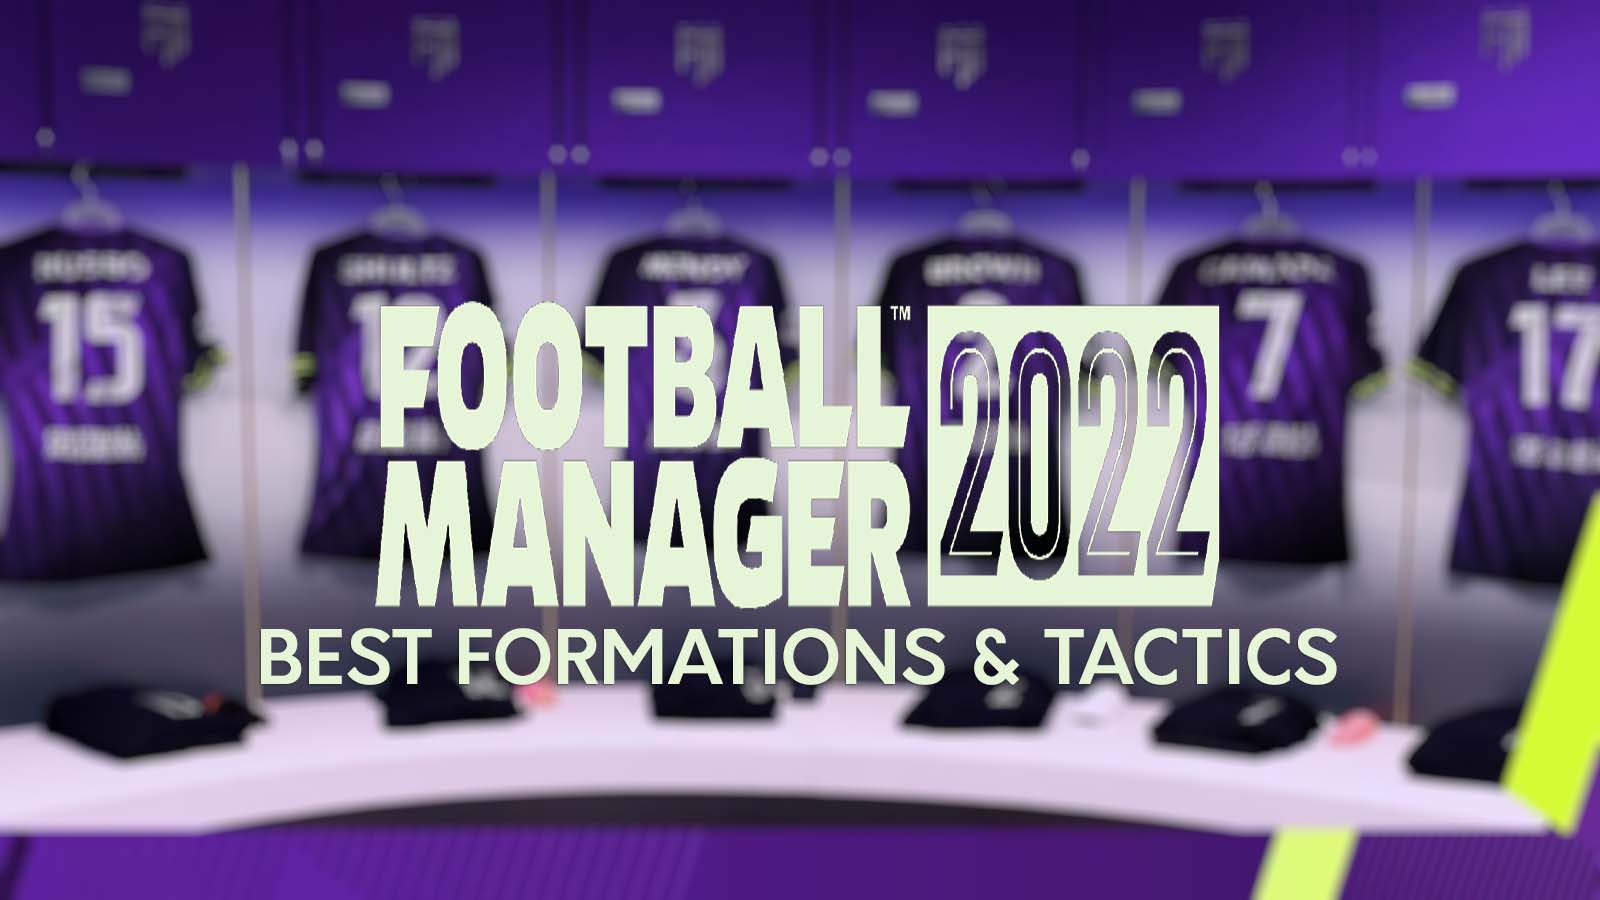 Football Manager 2022 best tactics